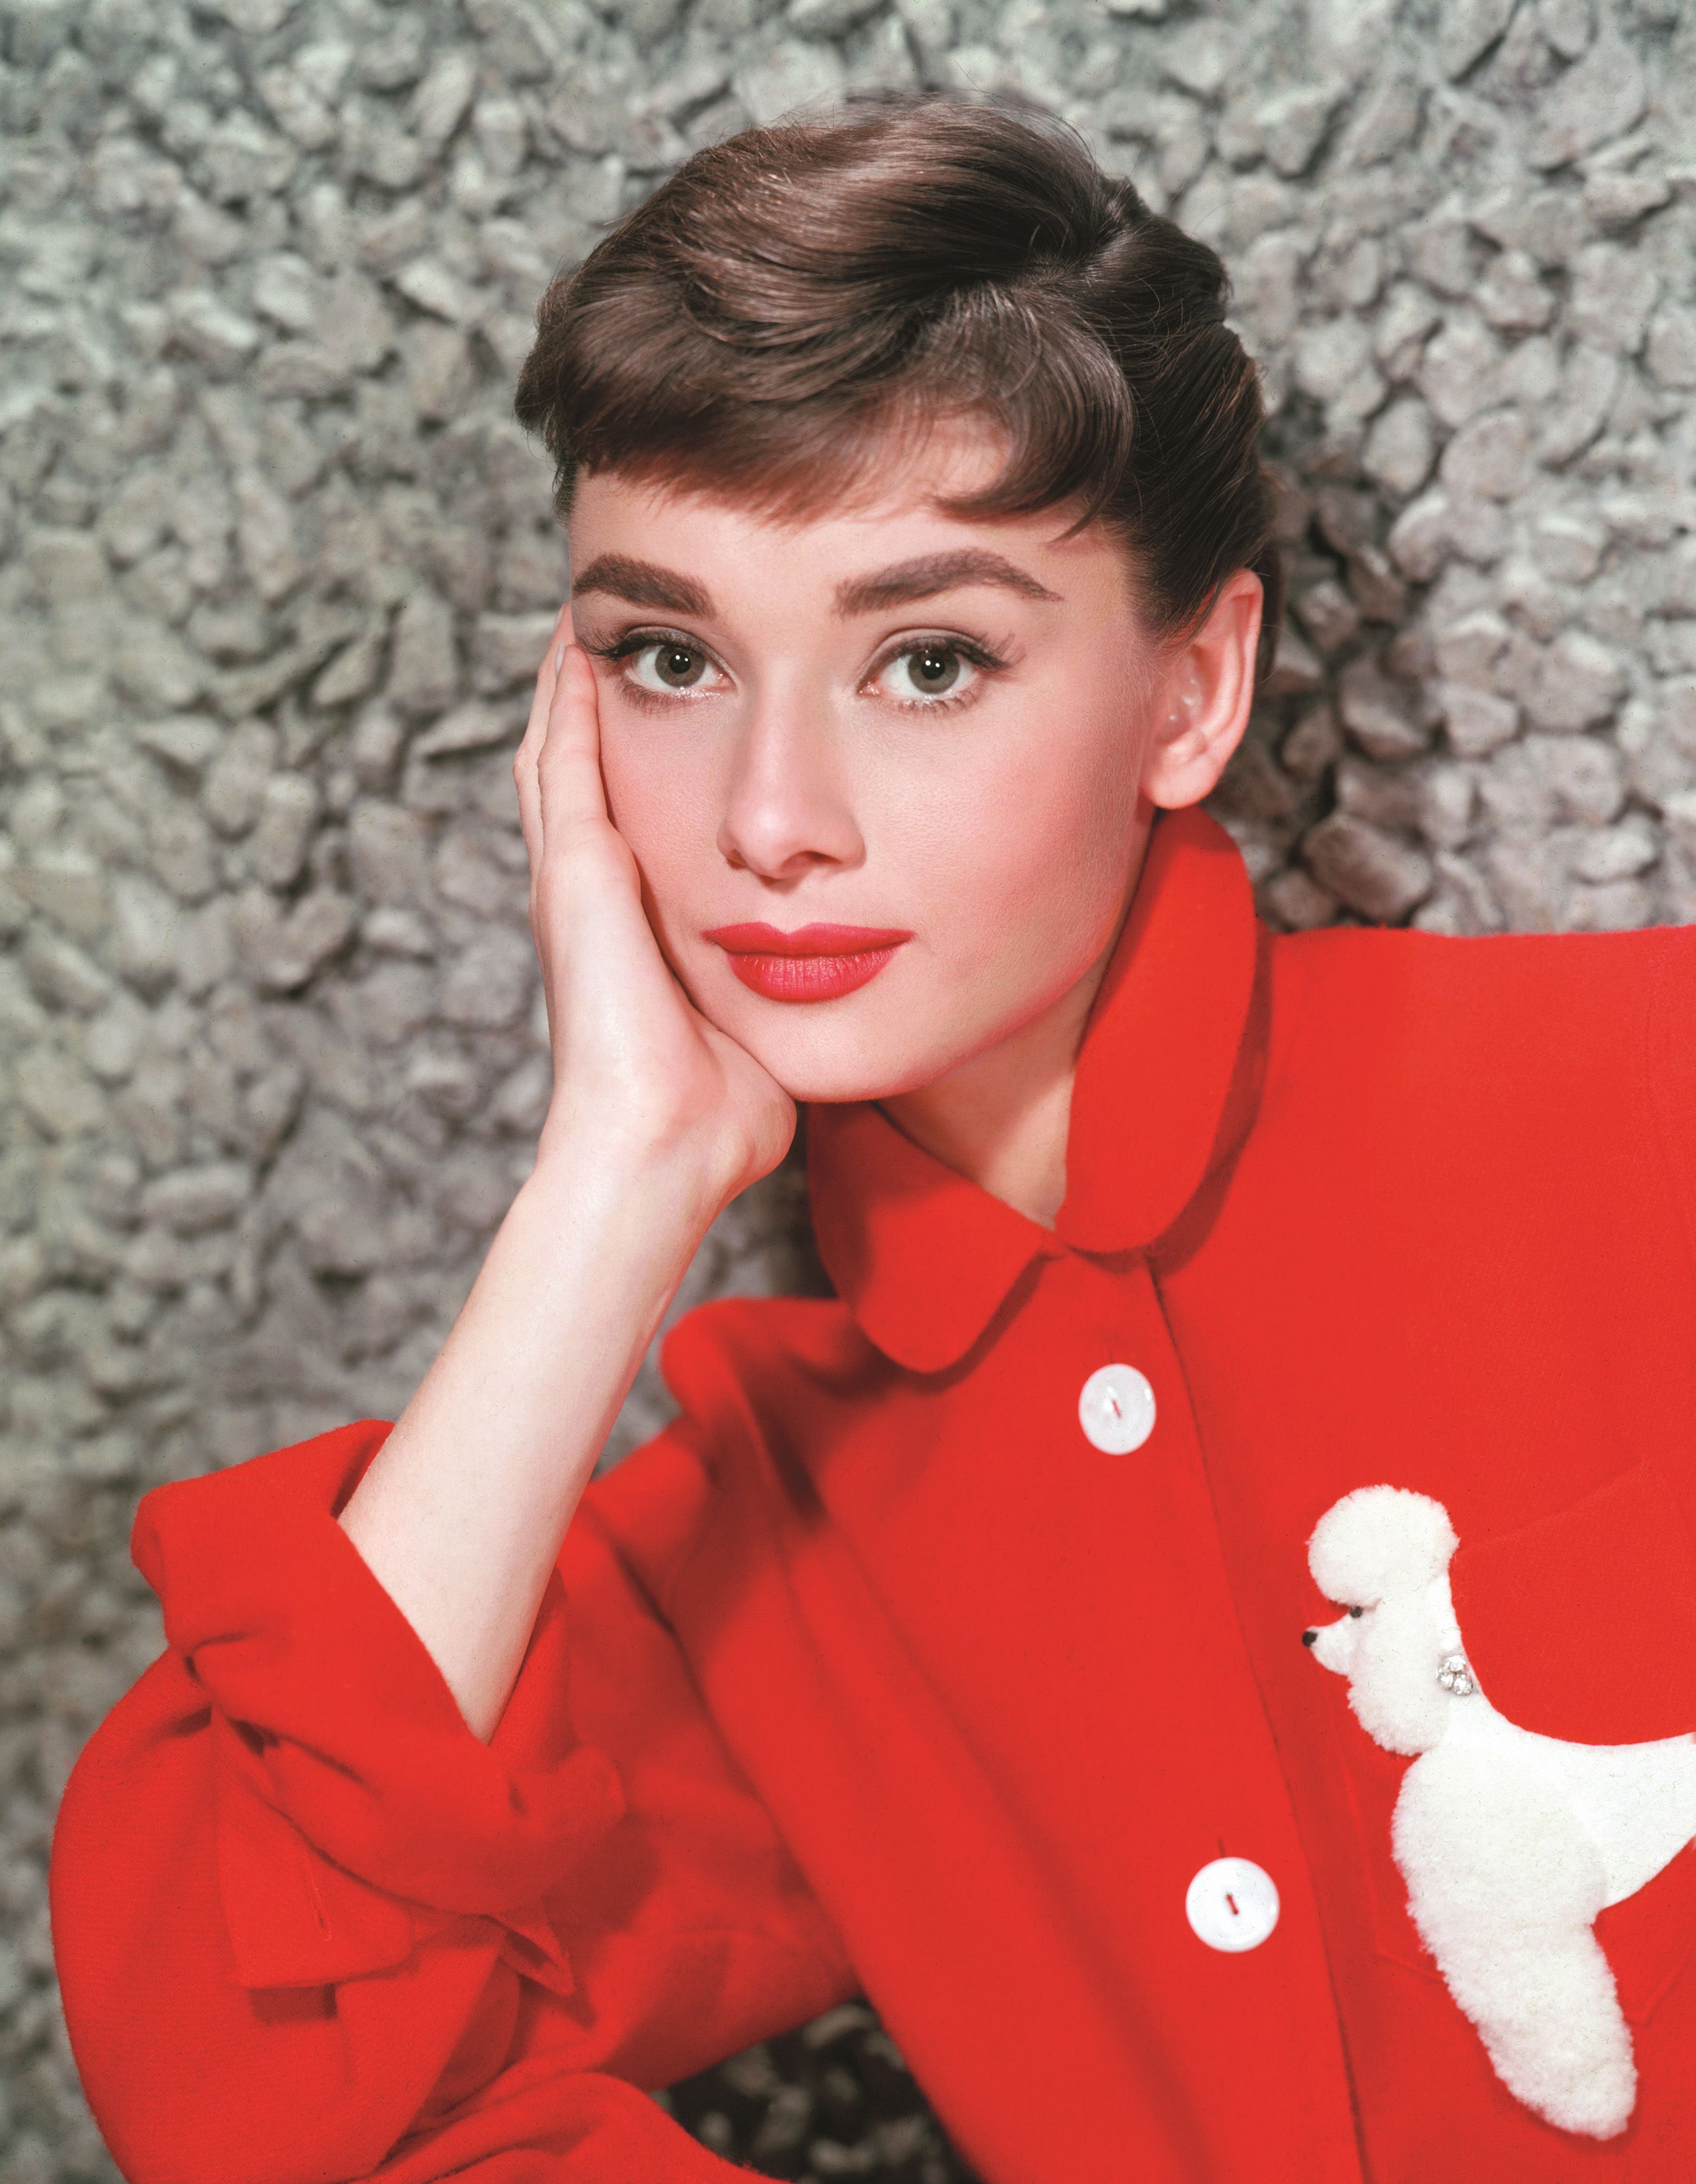 New Audrey Hepburn Book 2016 - Audrey: The 50s Book by David Wills